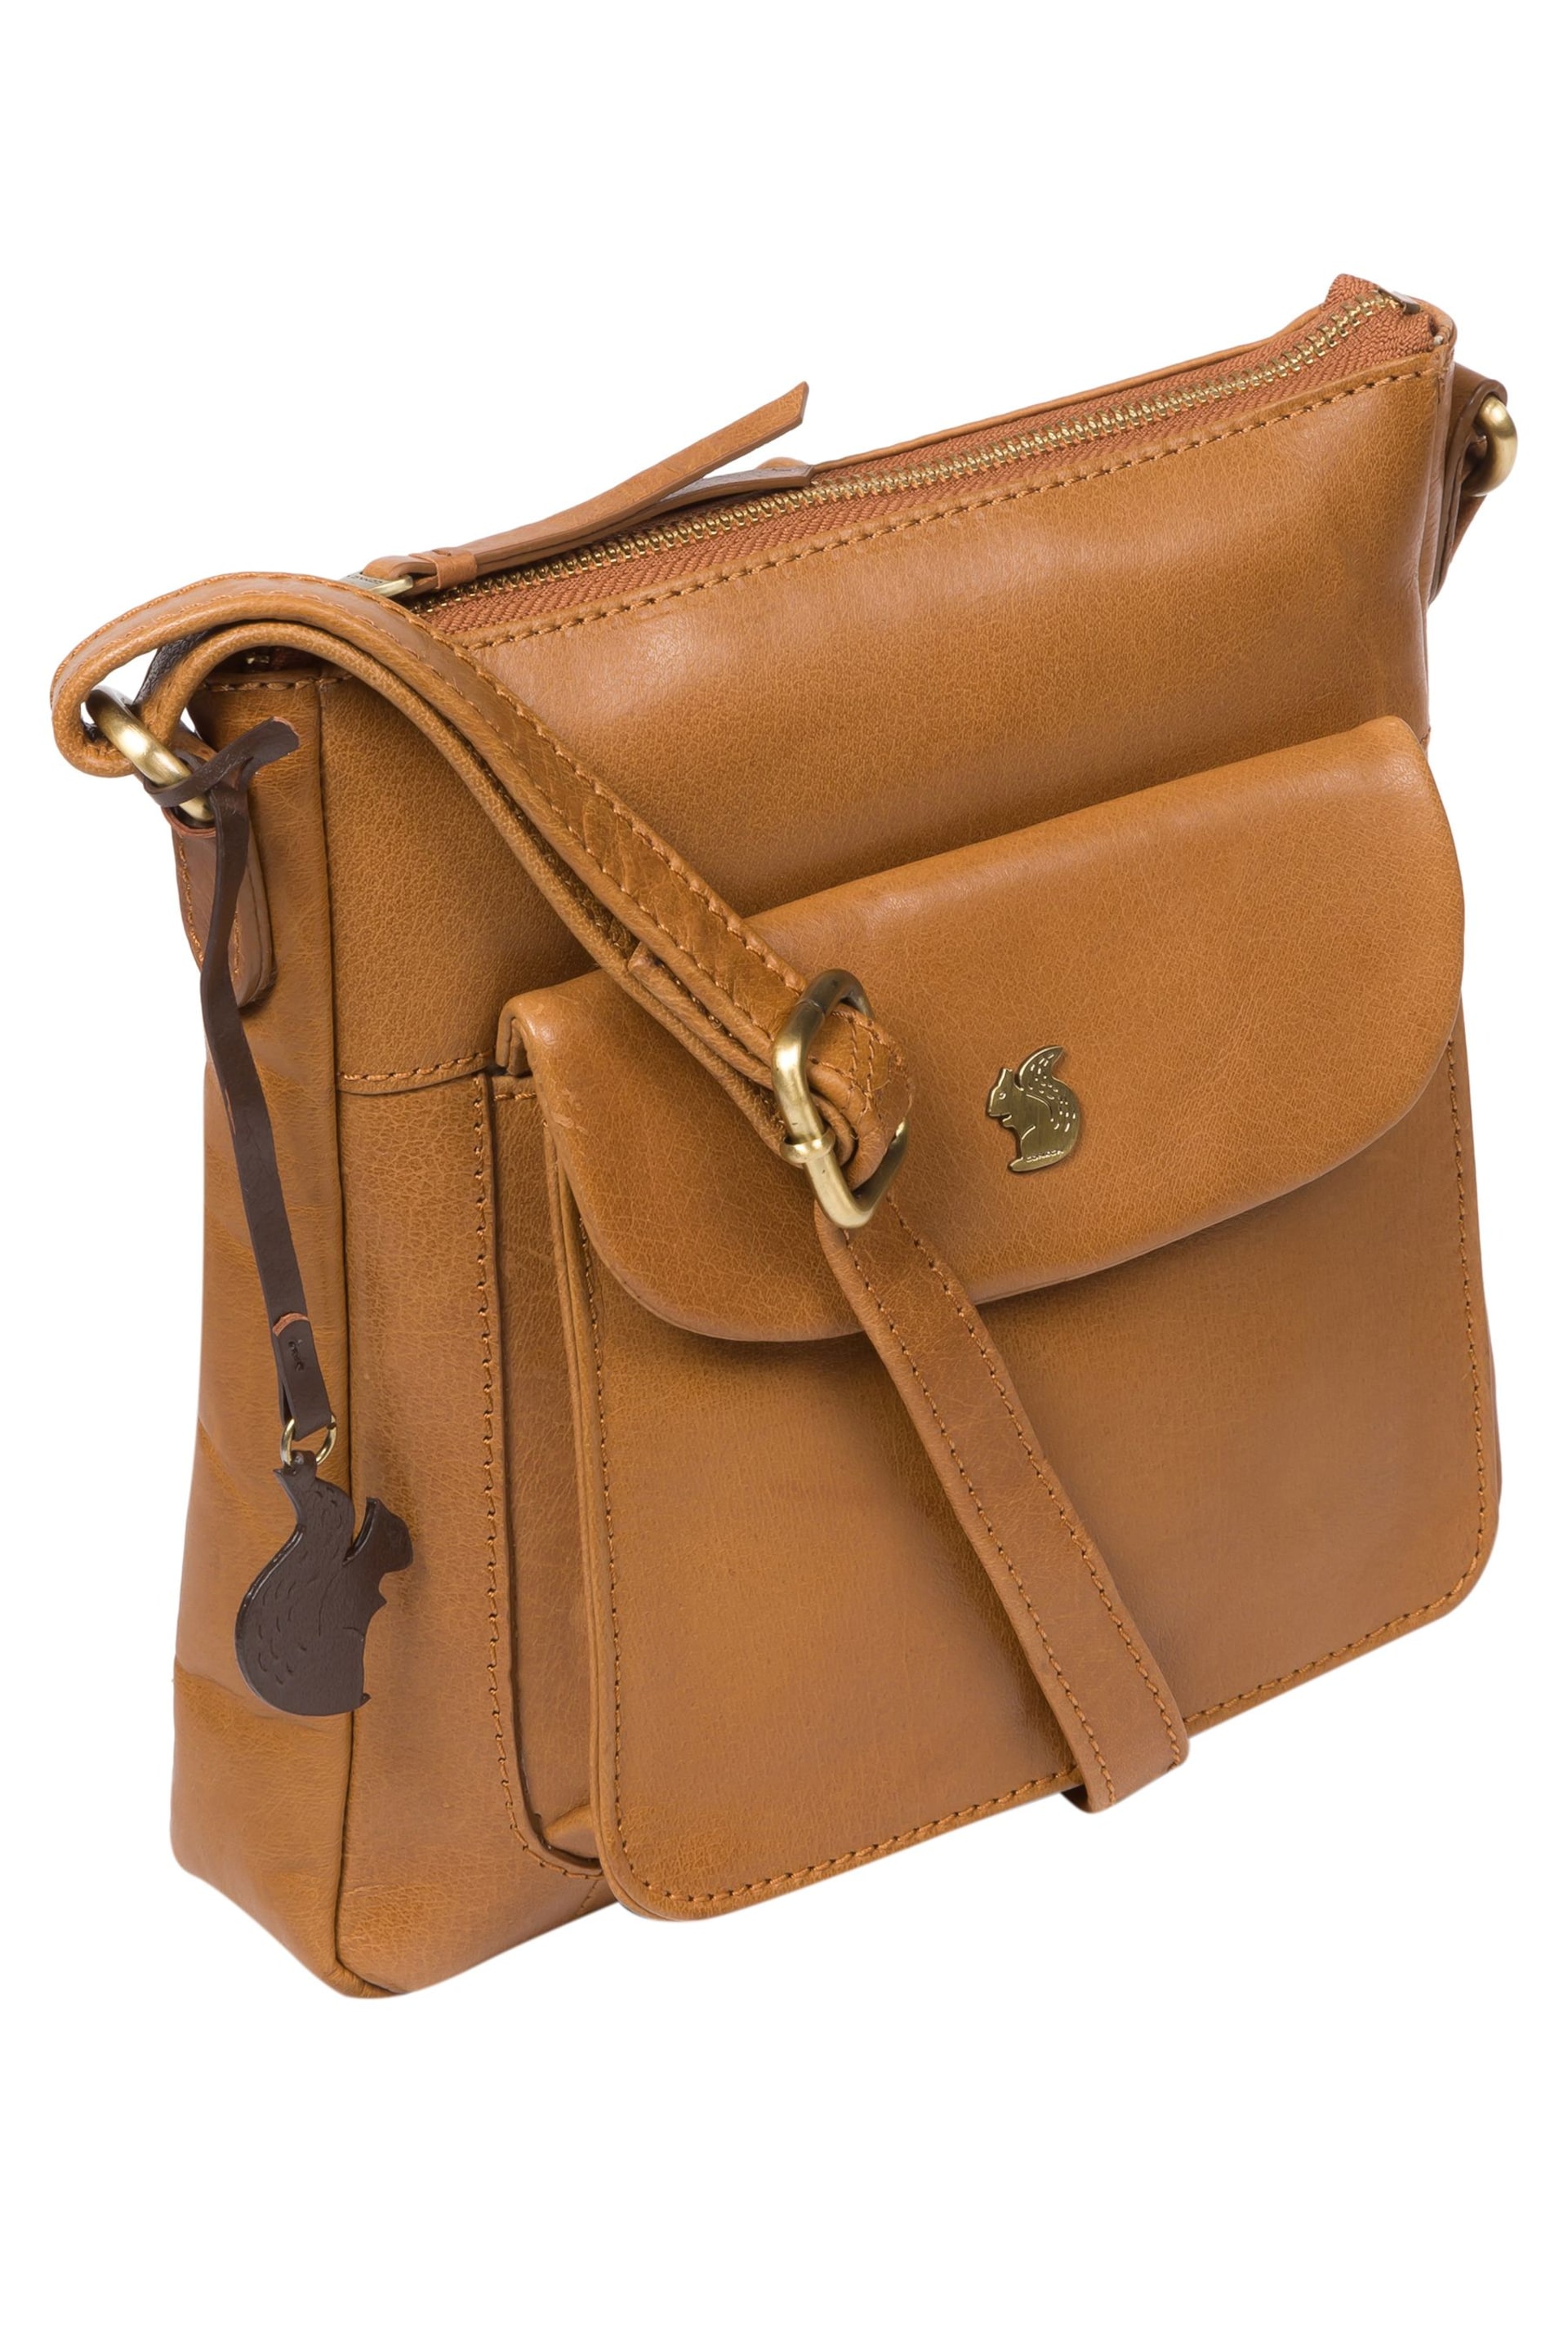 Conkca Shona Leather Cross-Body Bag - Image 6 of 7